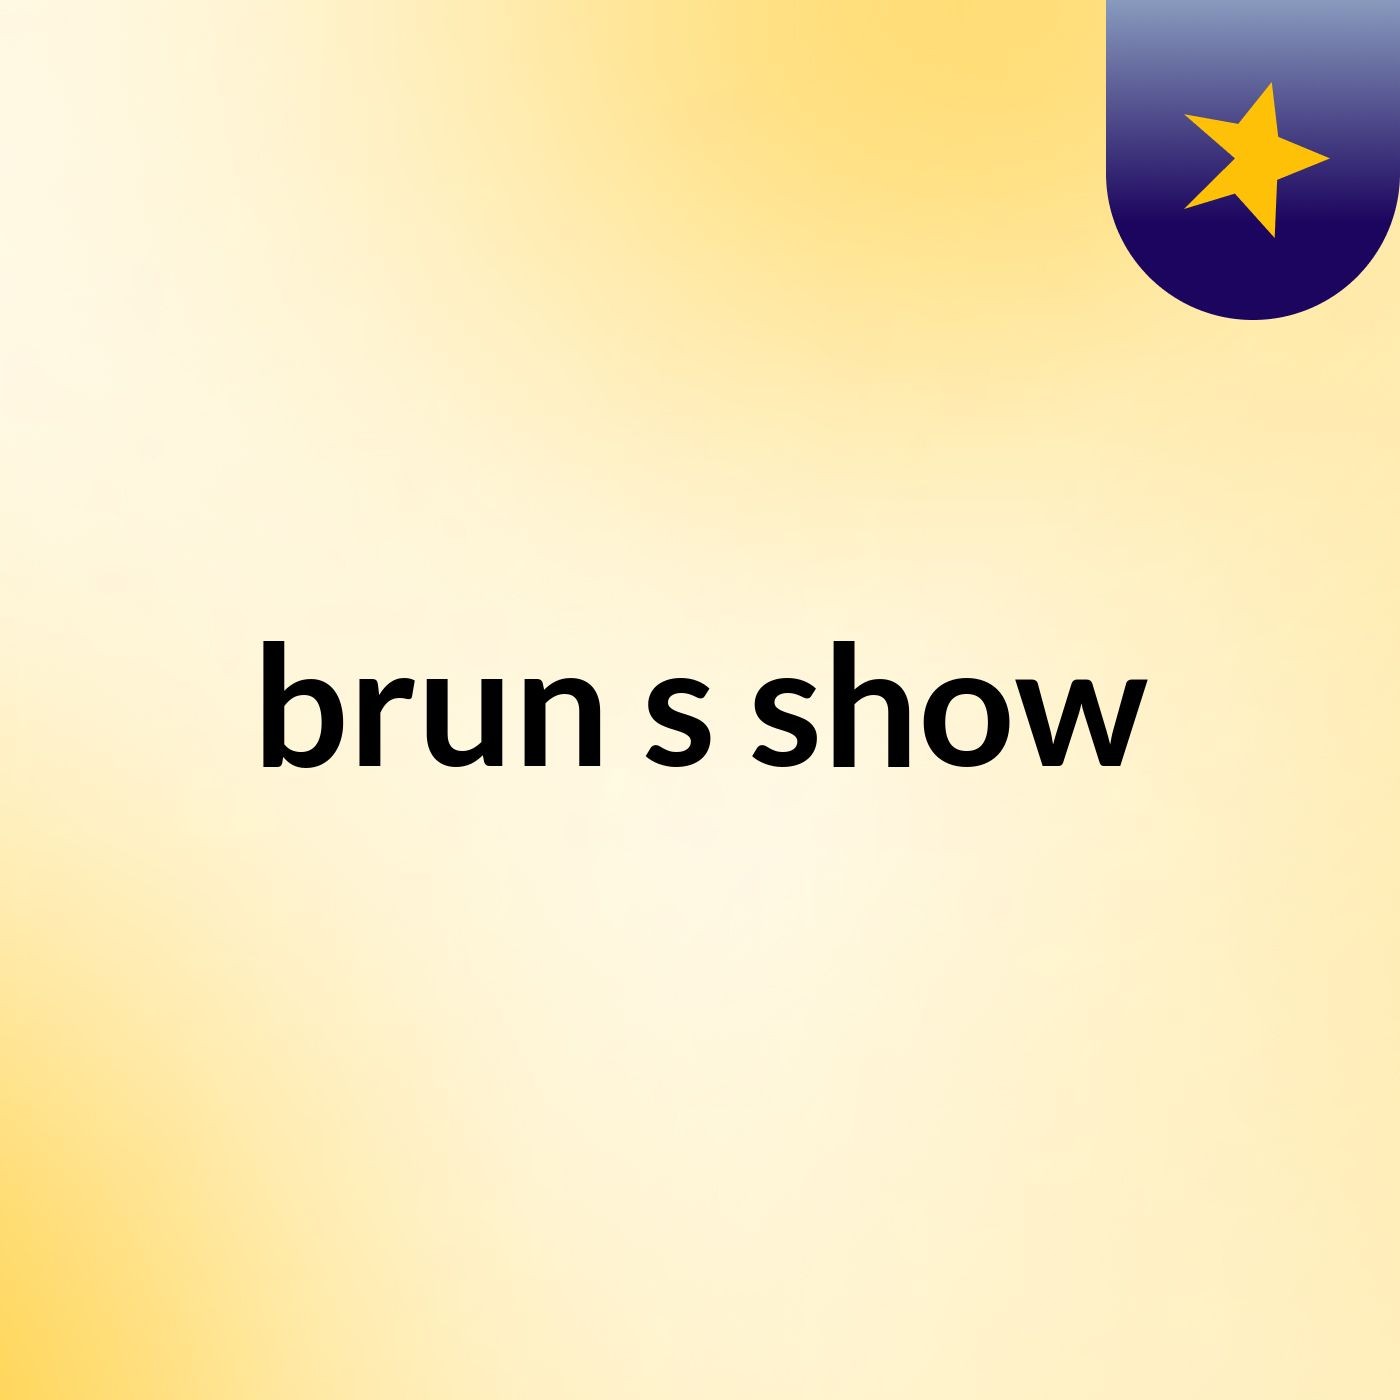 brun's show